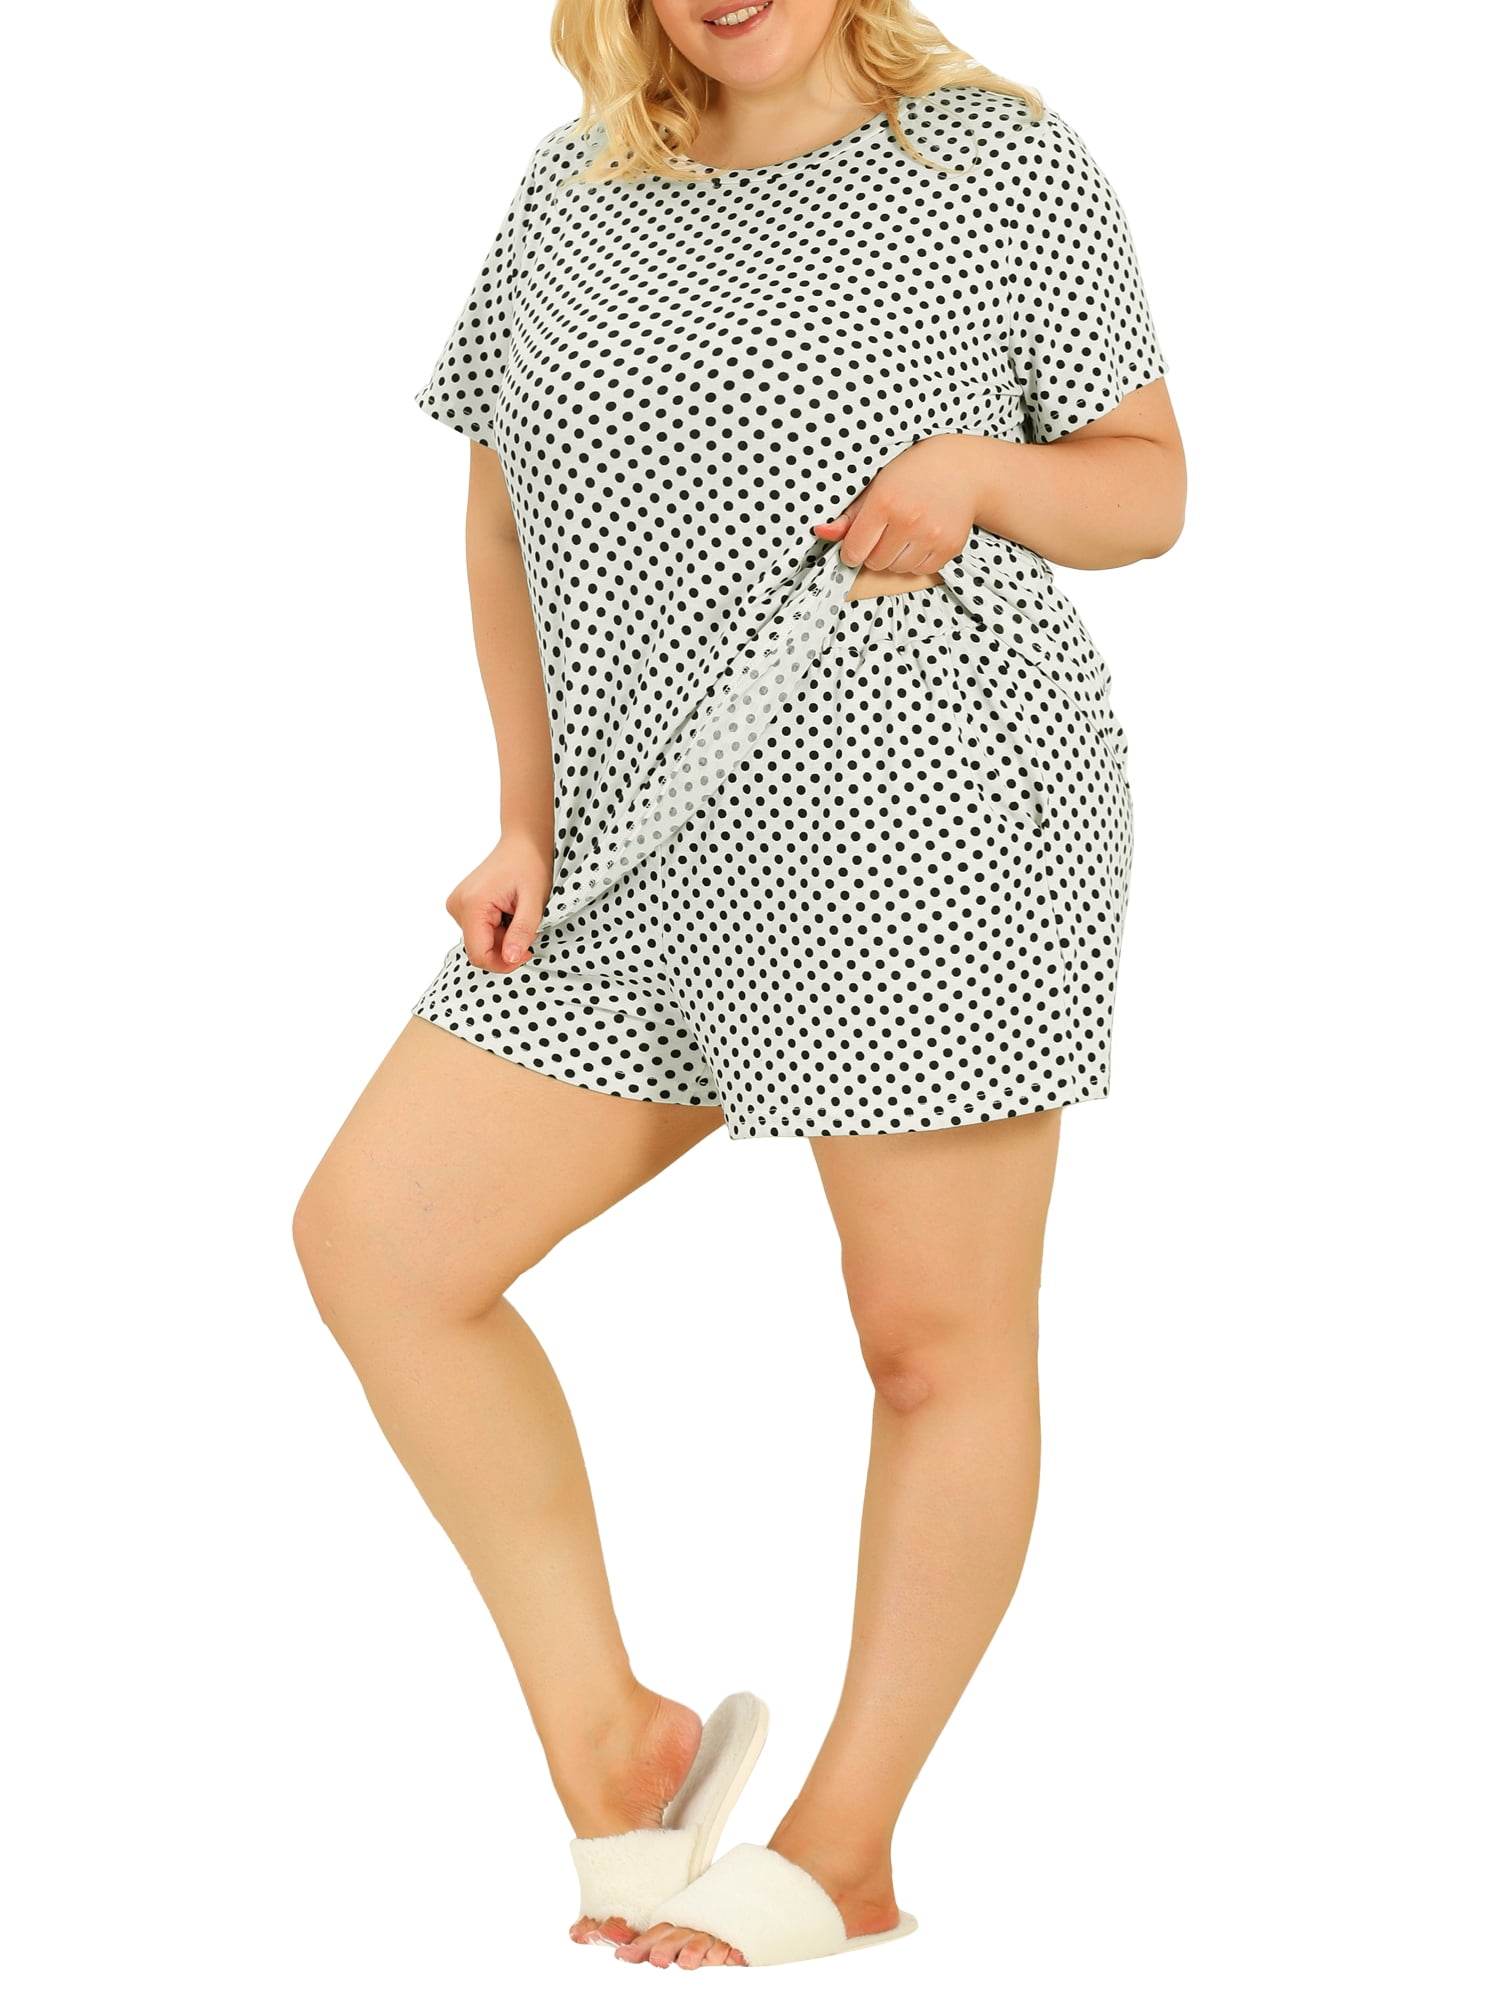 Agnes Orinda Womens Plus Size Nightgown Polka Dots Short Sleeve Sleepwear Nightgowns